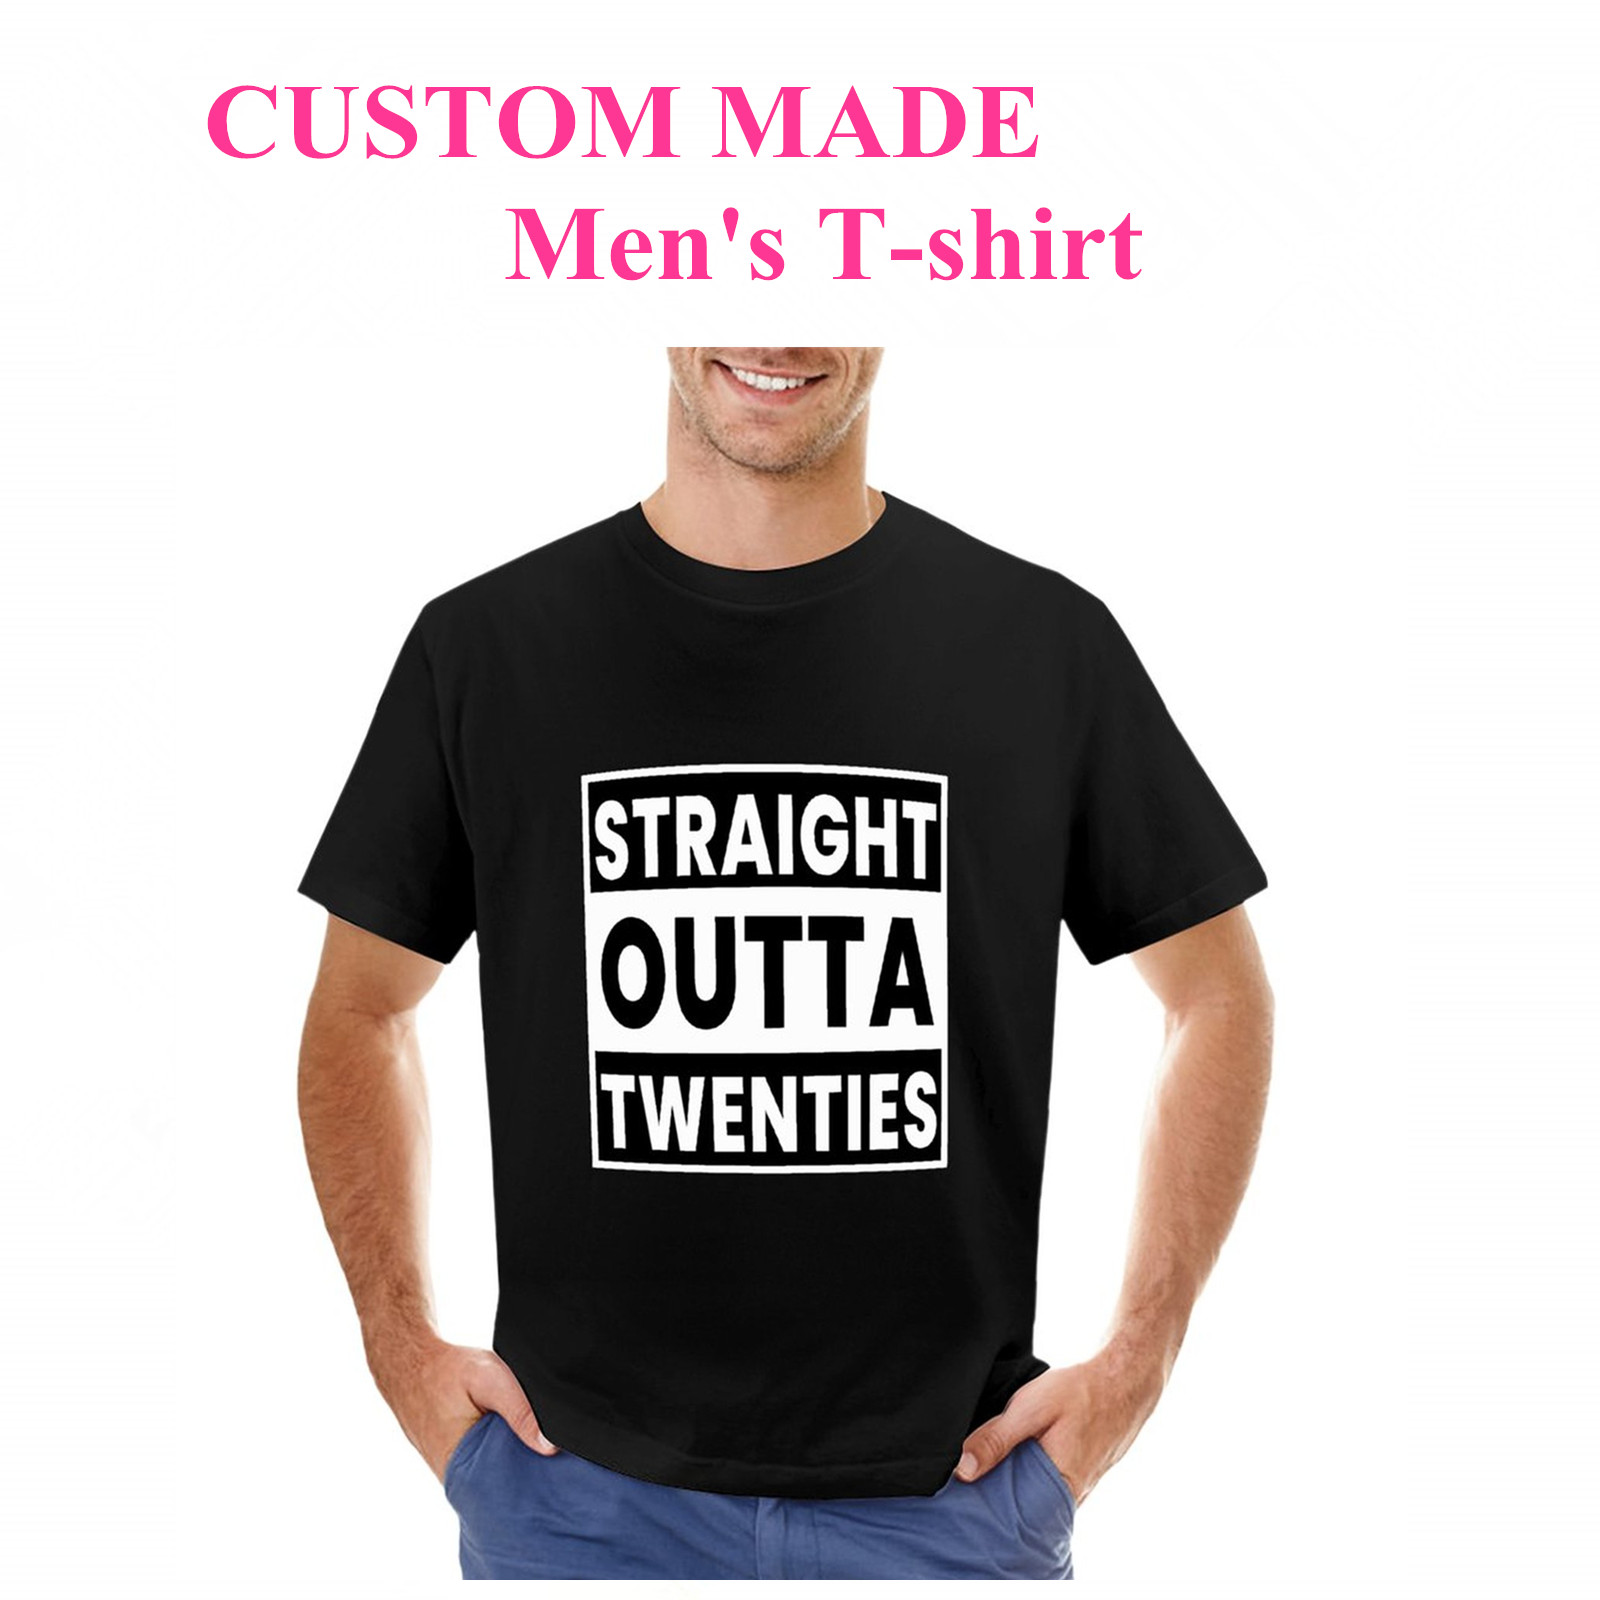 CUSTOM MADE Men's T-shirt 100% Cotton Black